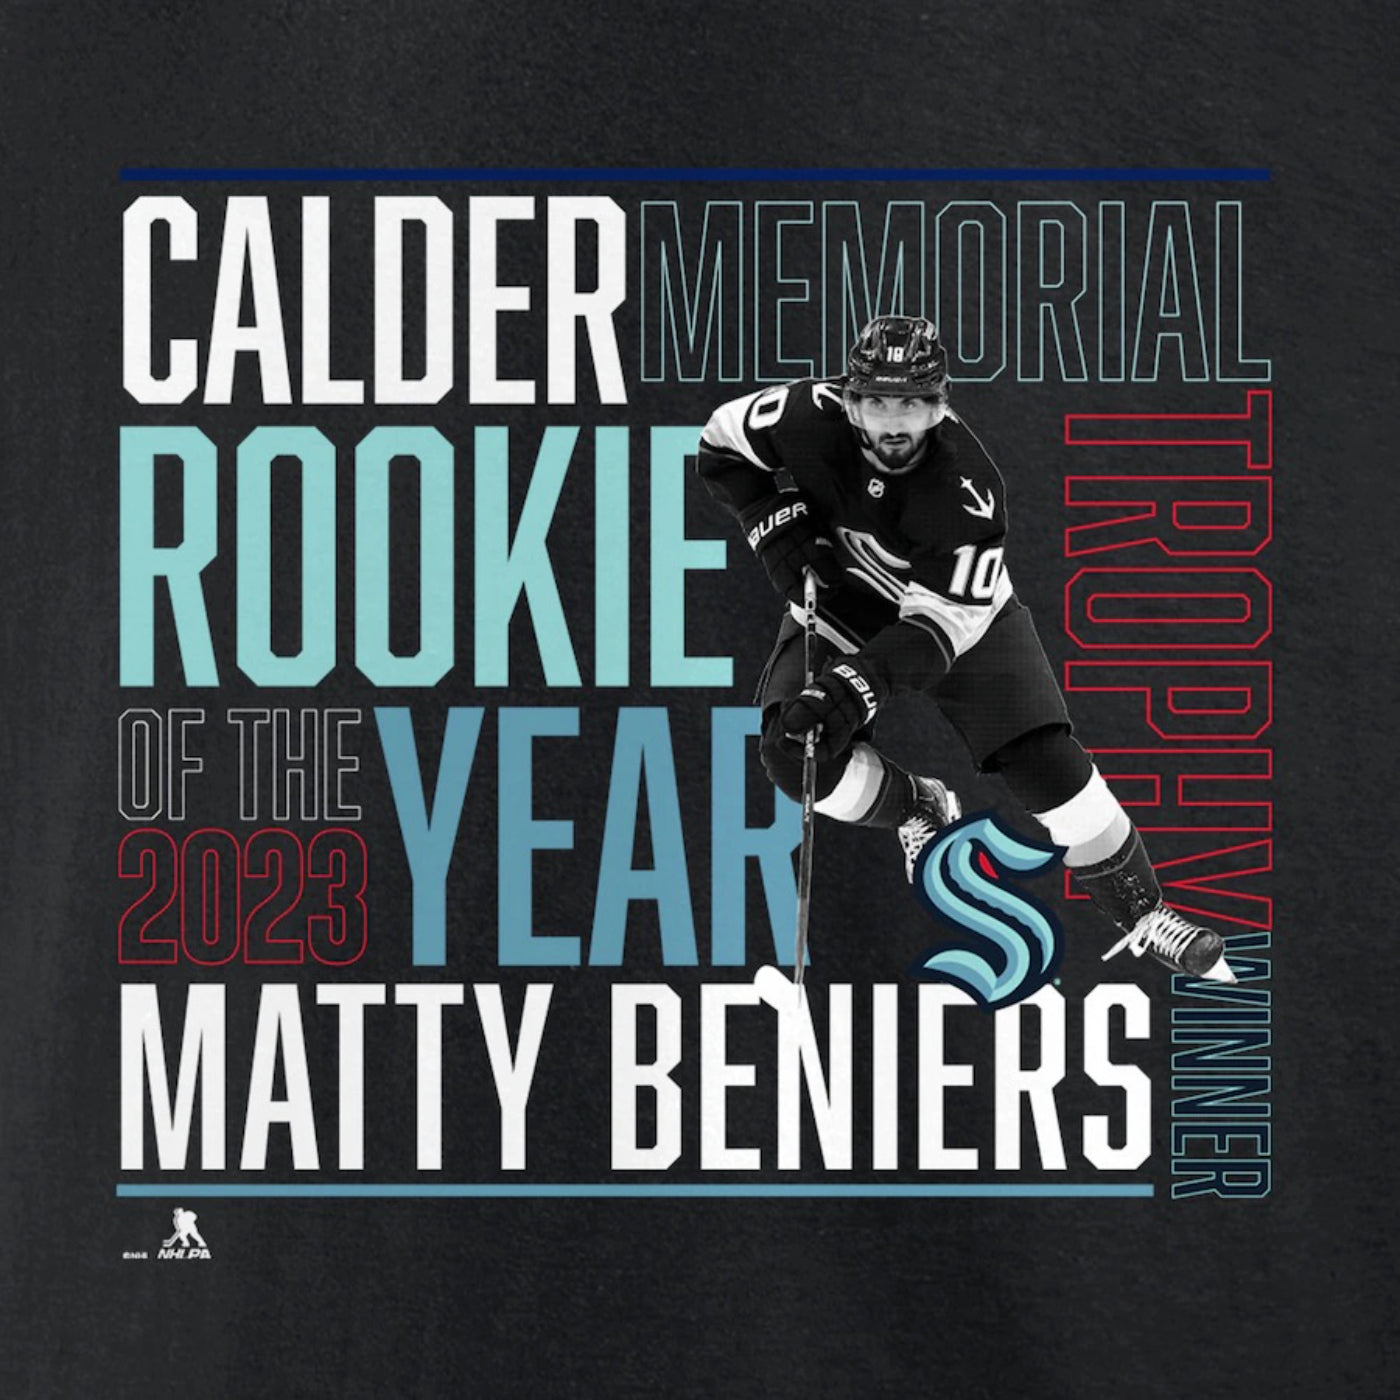 2022-2023 Calder Memorial Trophy Winner Matty Beniers Seattle Kraken Poster  shirt, hoodie, longsleeve, sweatshirt, v-neck tee